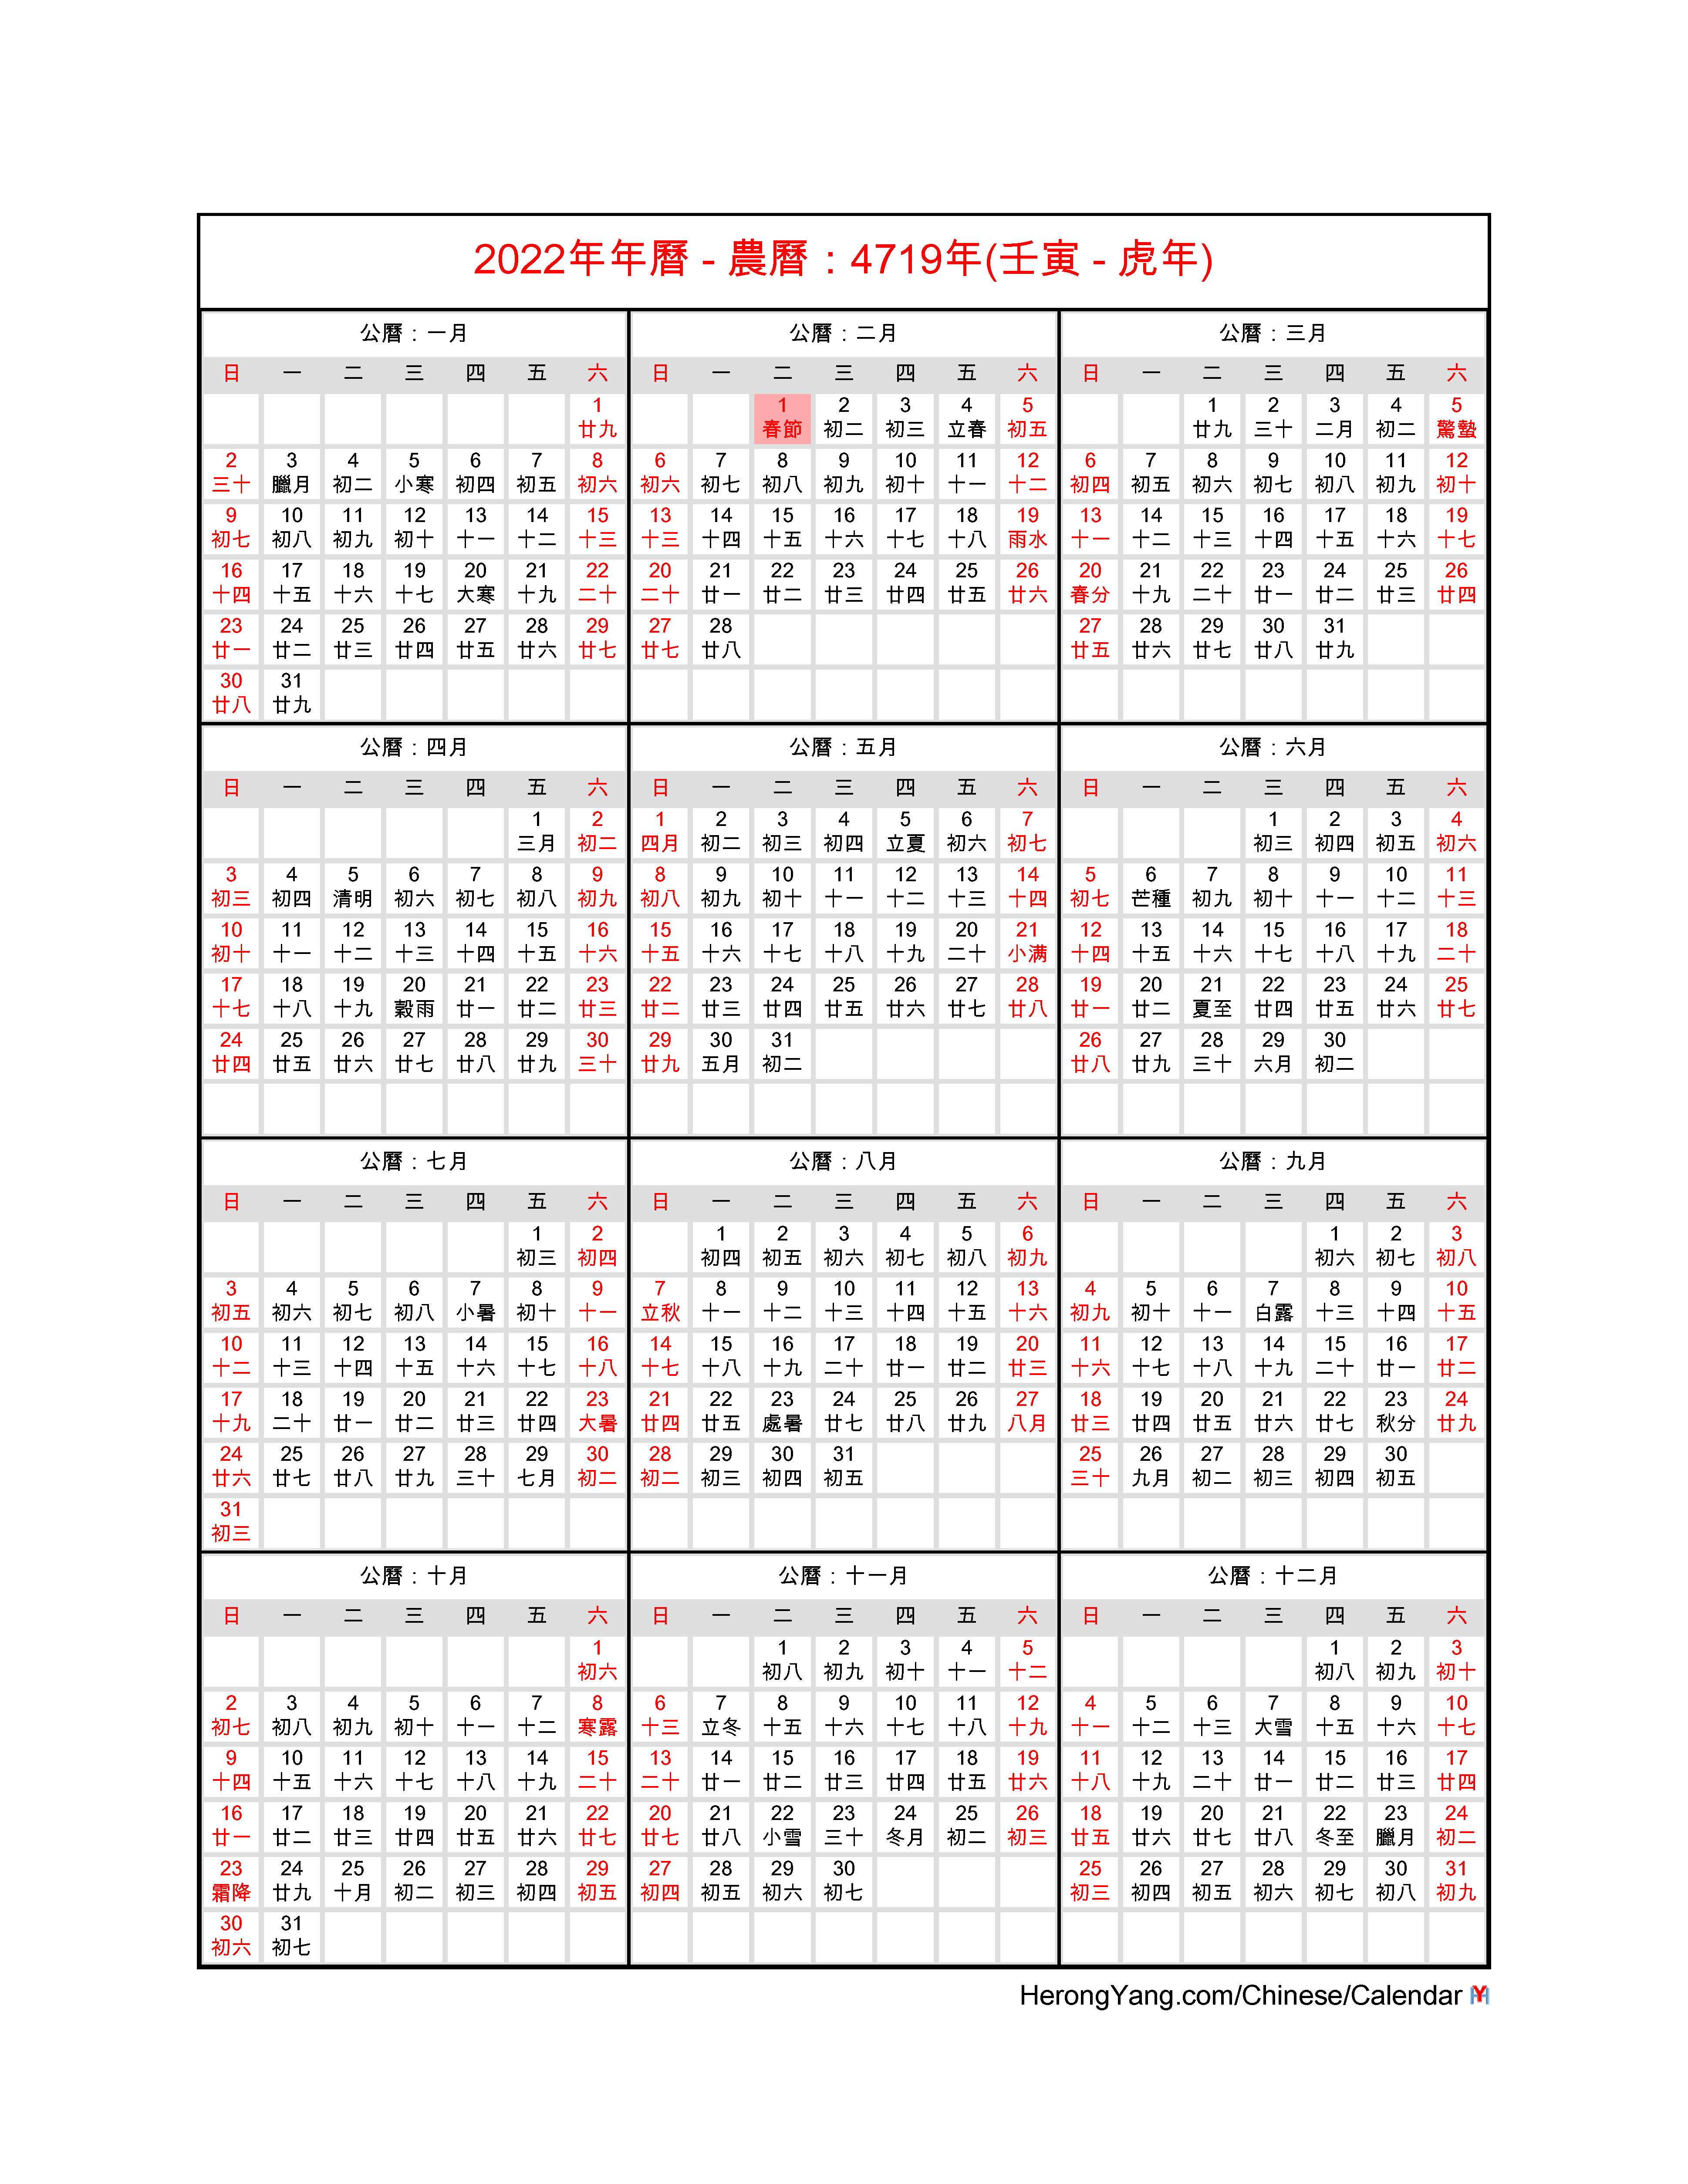 Lunar To Gregorian Calendar 2022 Free Chinese Calendar 2022 - Year Of The Tiger